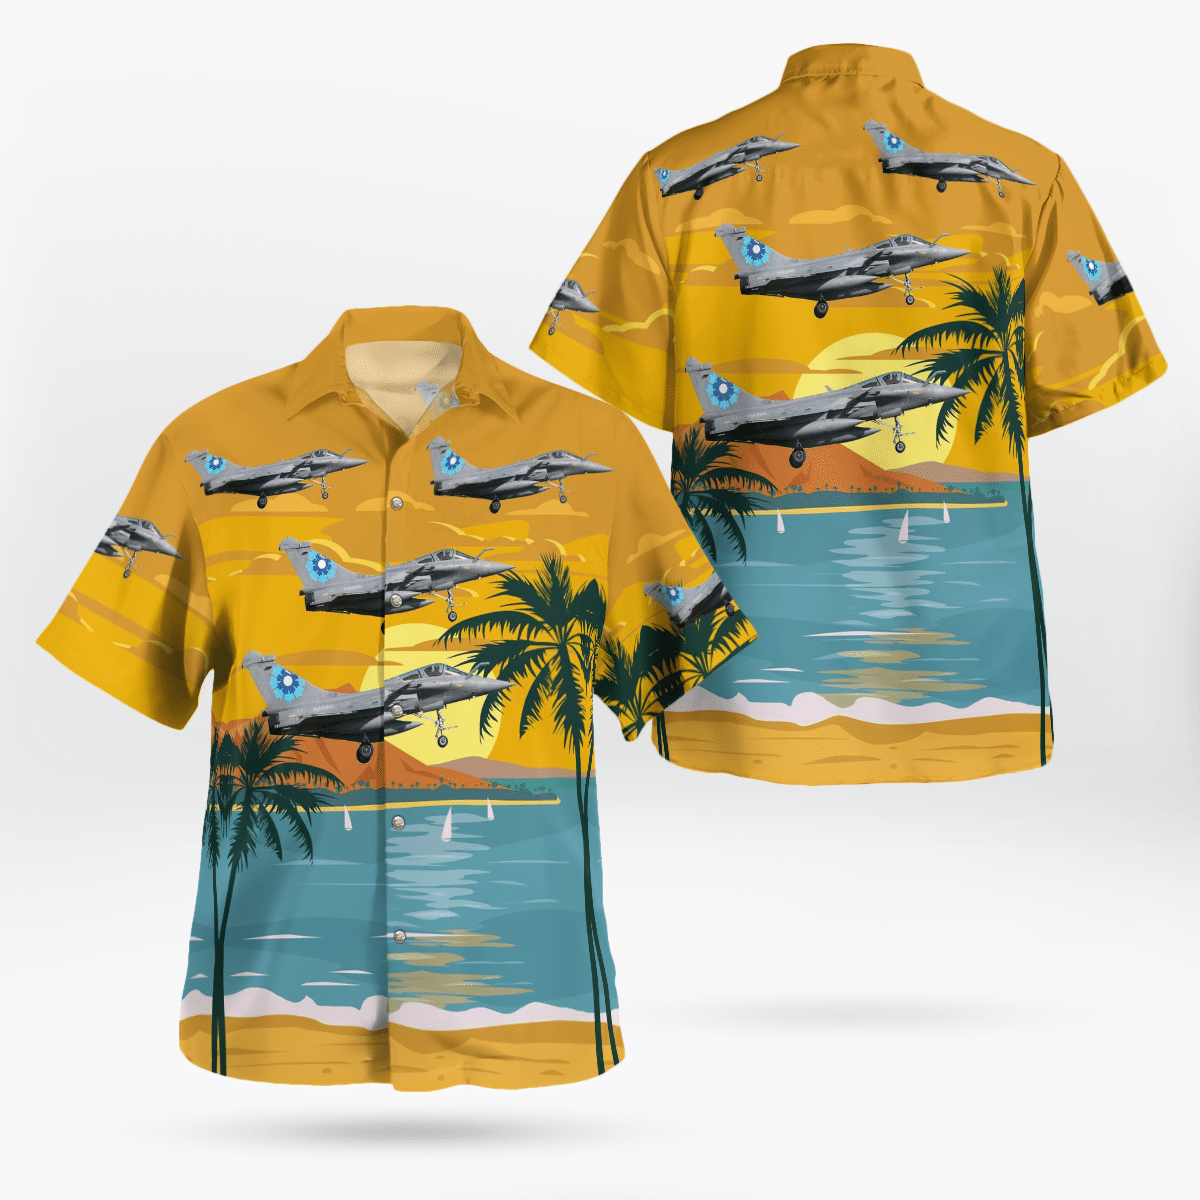 Why don't you order Hot Hawaiian Shirt today? 245